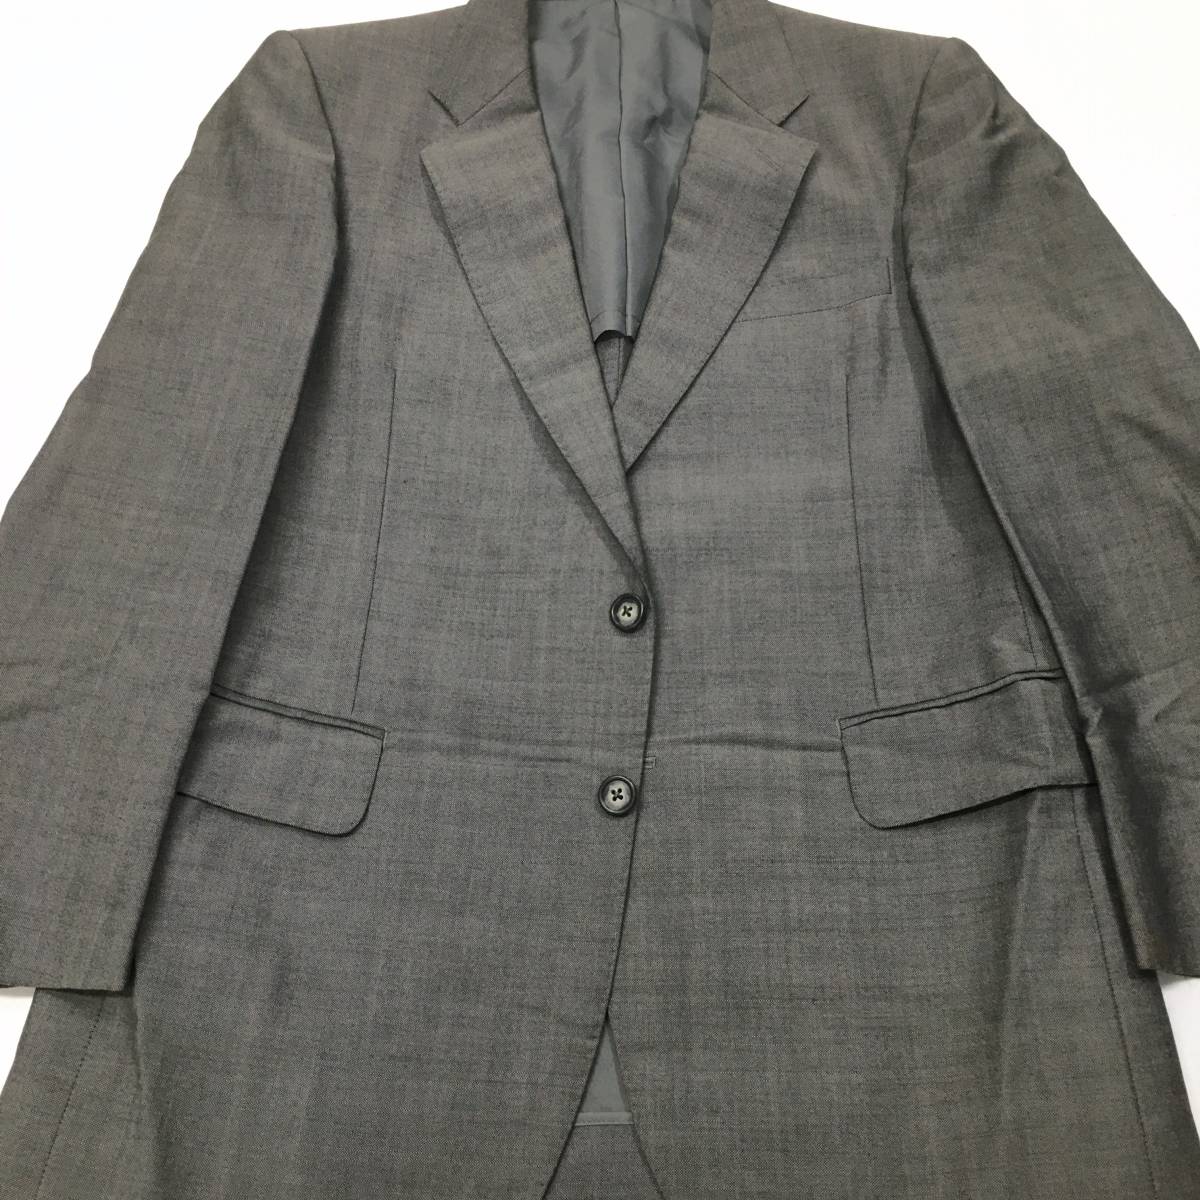 K10-282 Burberrys スーツ メンズ サイズ 92-80-170A5 グレー系 毛 85% / ジャケット パンツ セットアップ 上下 バーバリー_画像2